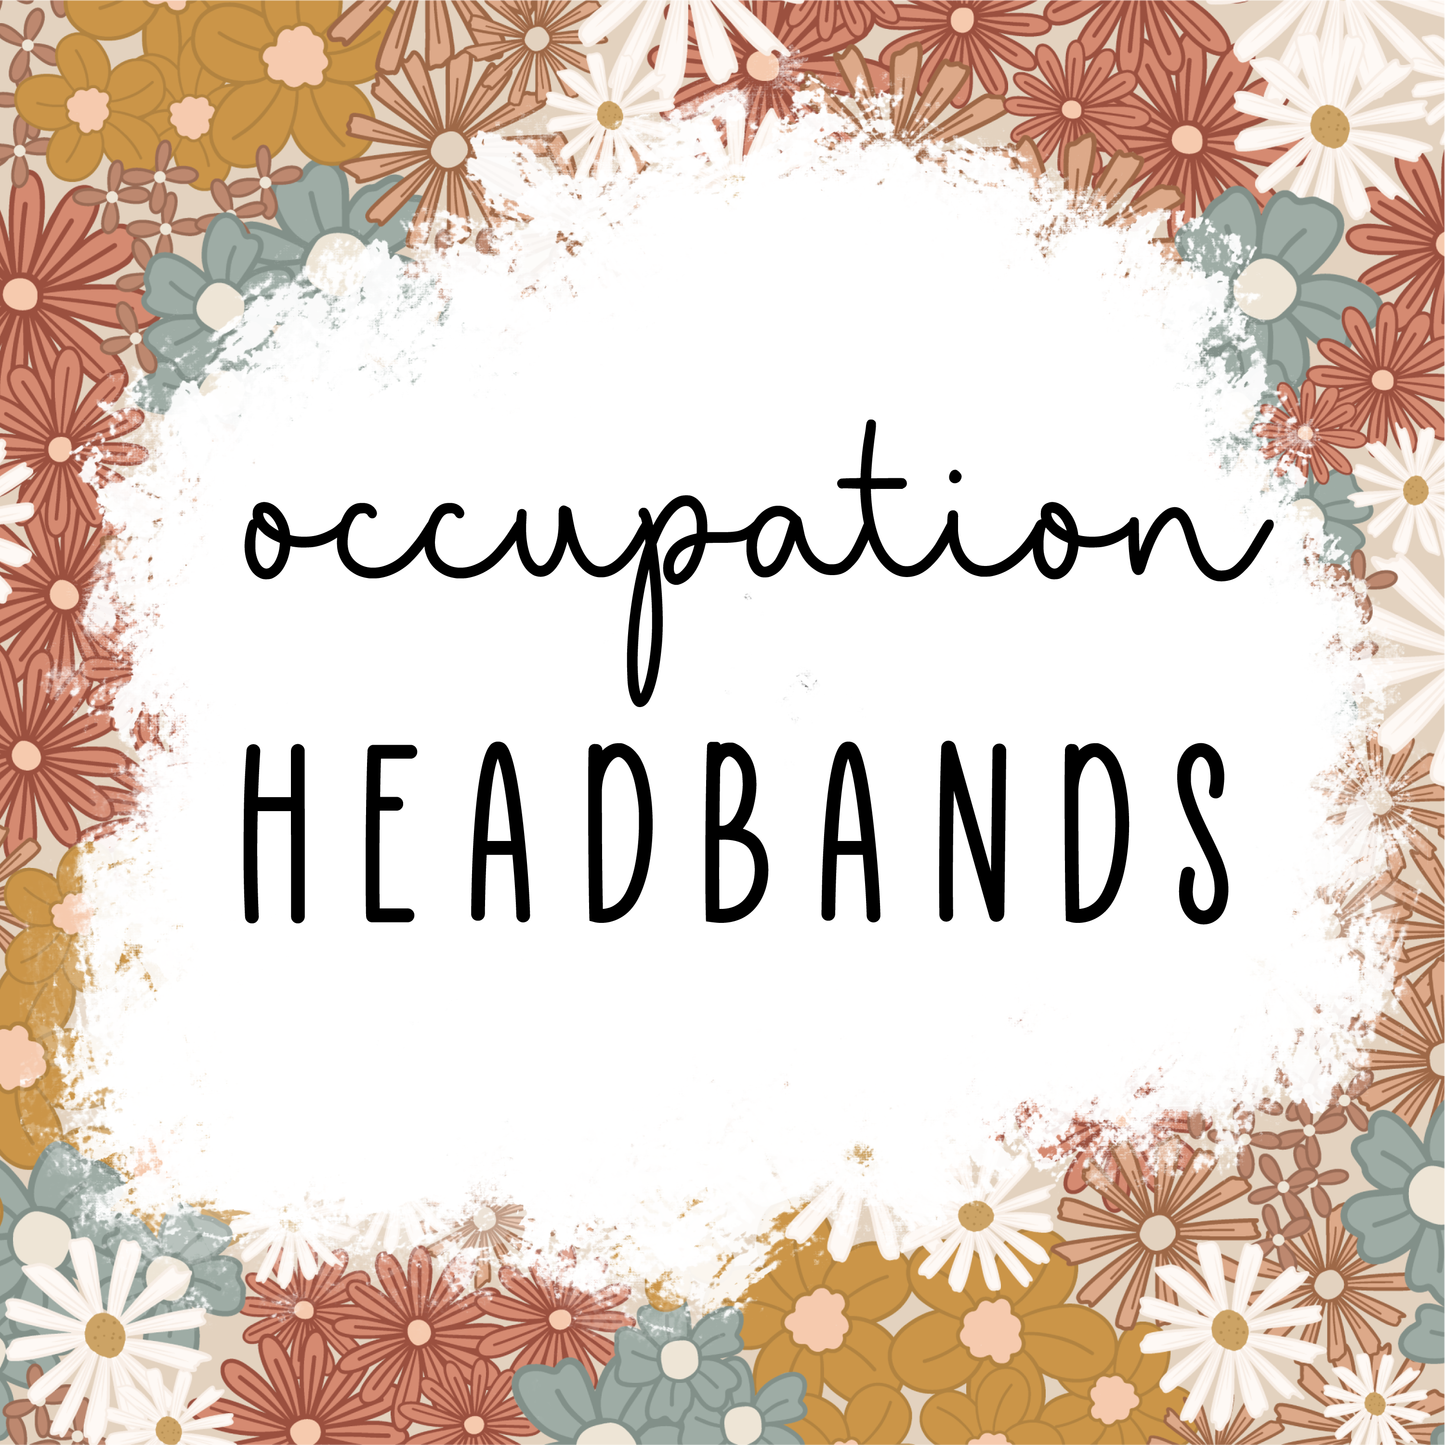 Occupation Headband Yard